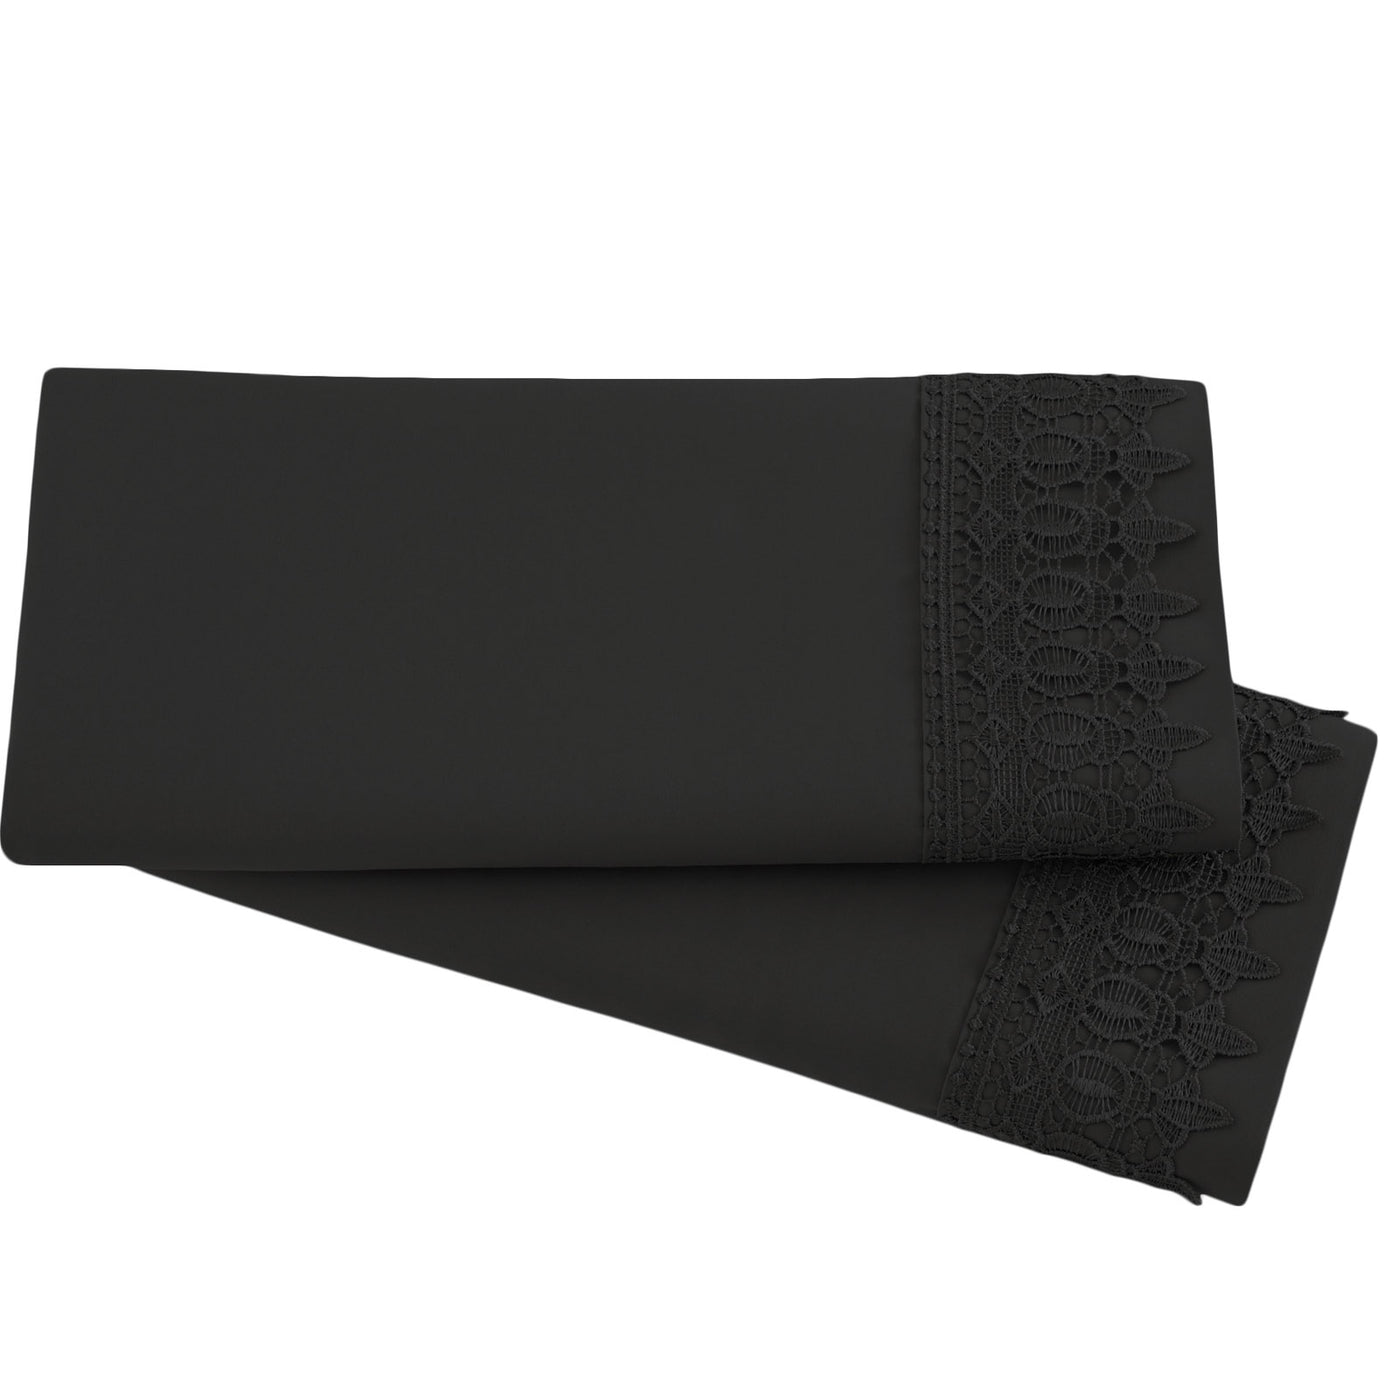 2-Piece Lace Pillowcase Set in Black